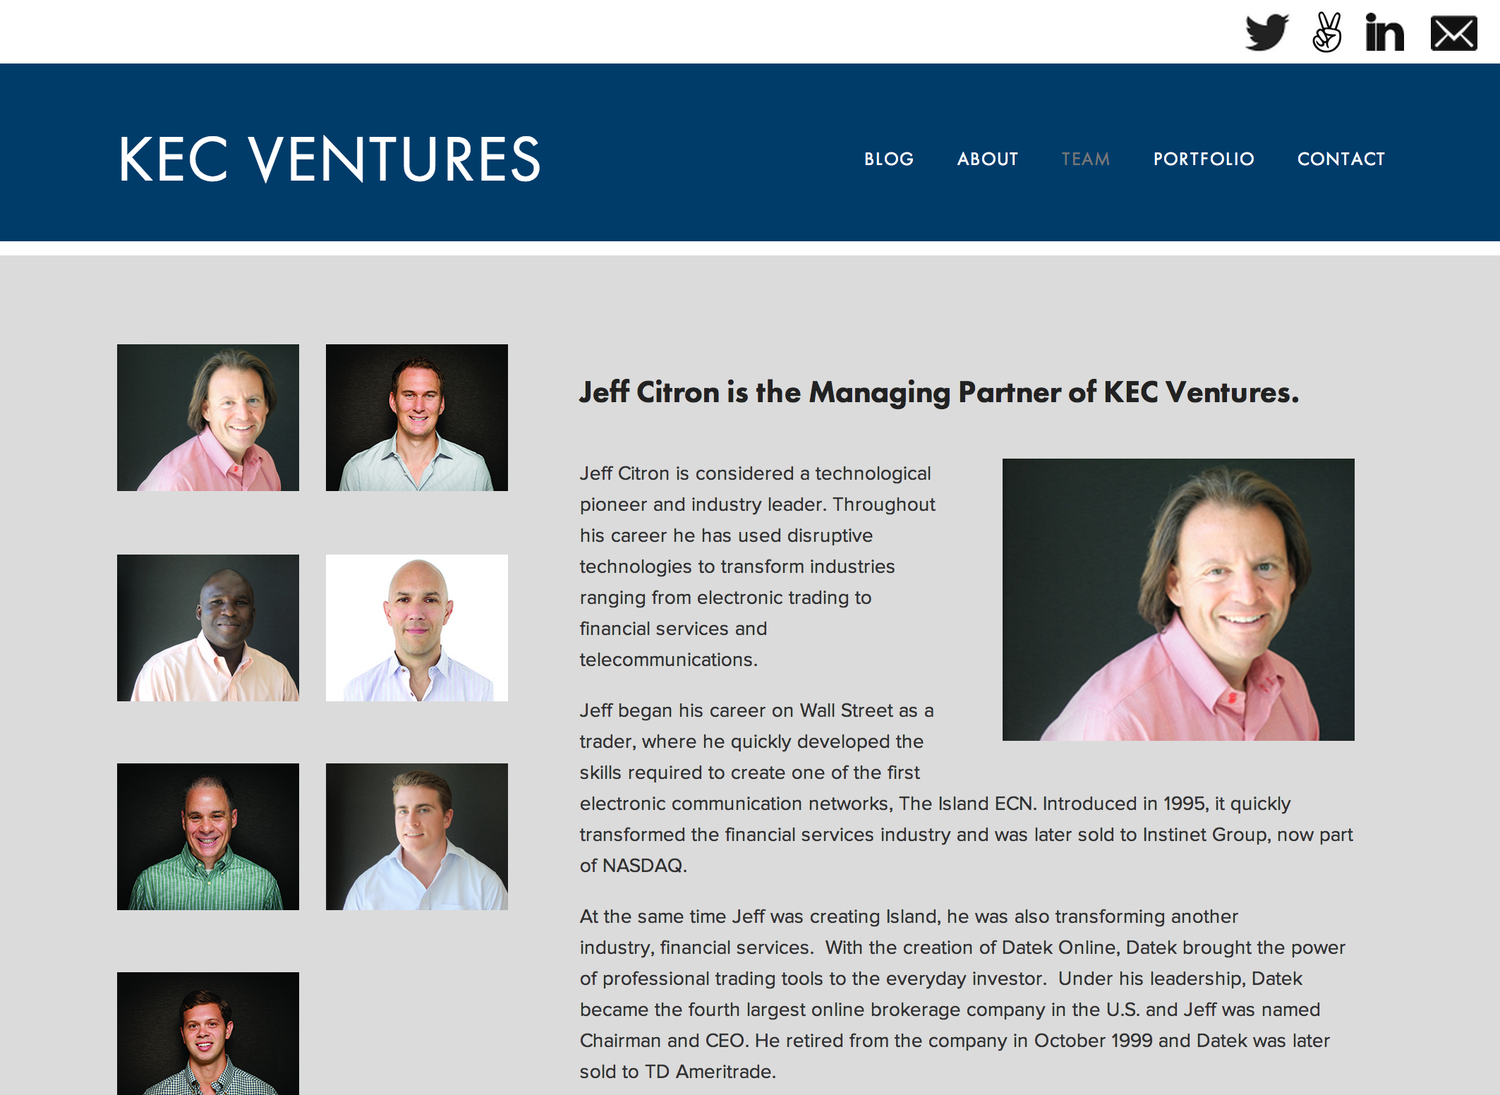 KEC Ventures